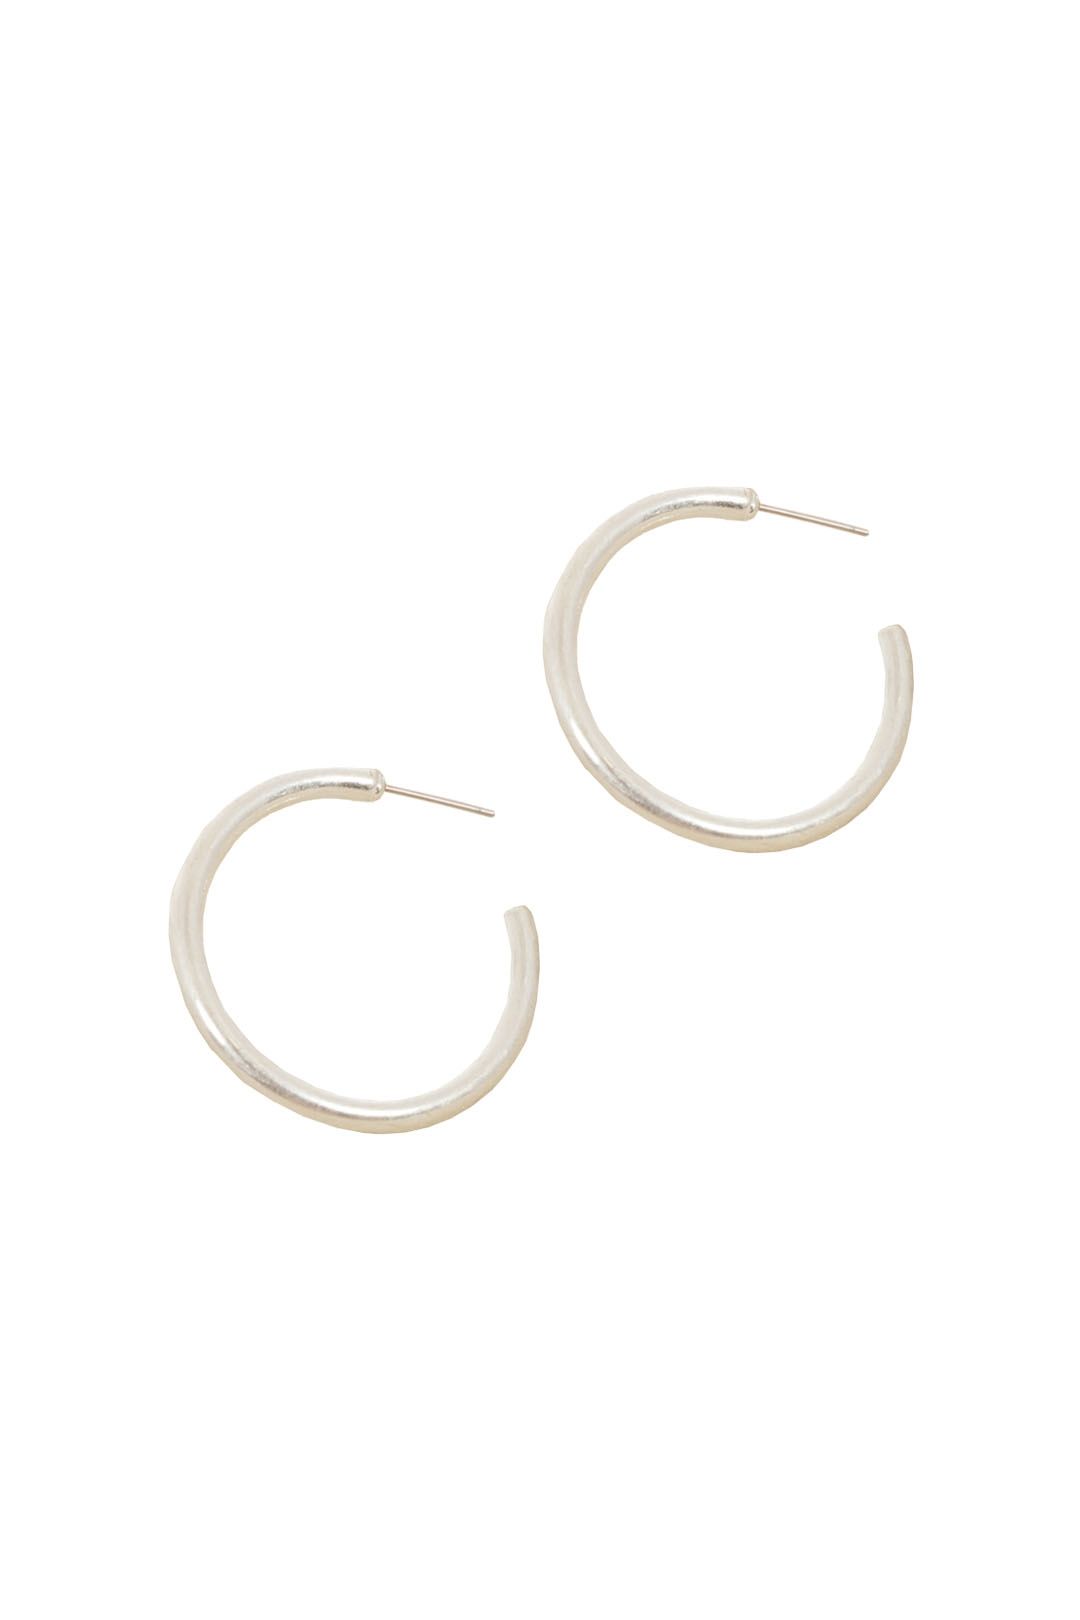 Adorne - Medium Open End Metal Hoop Earring - Silver - Front